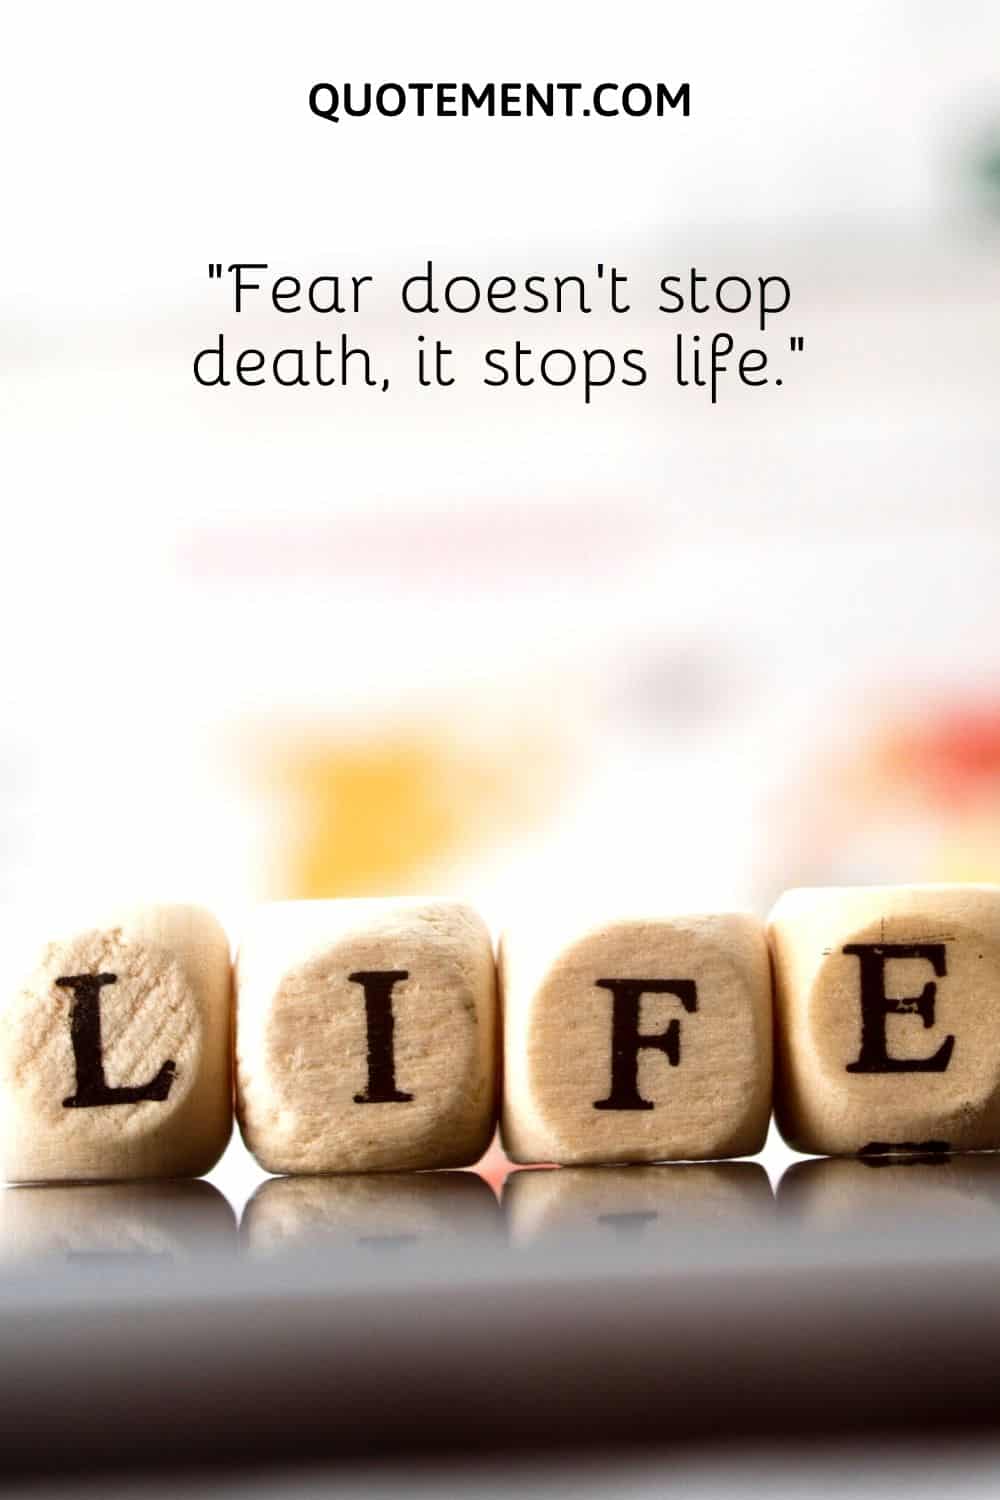 Fear doesn’t stop death, it stops life